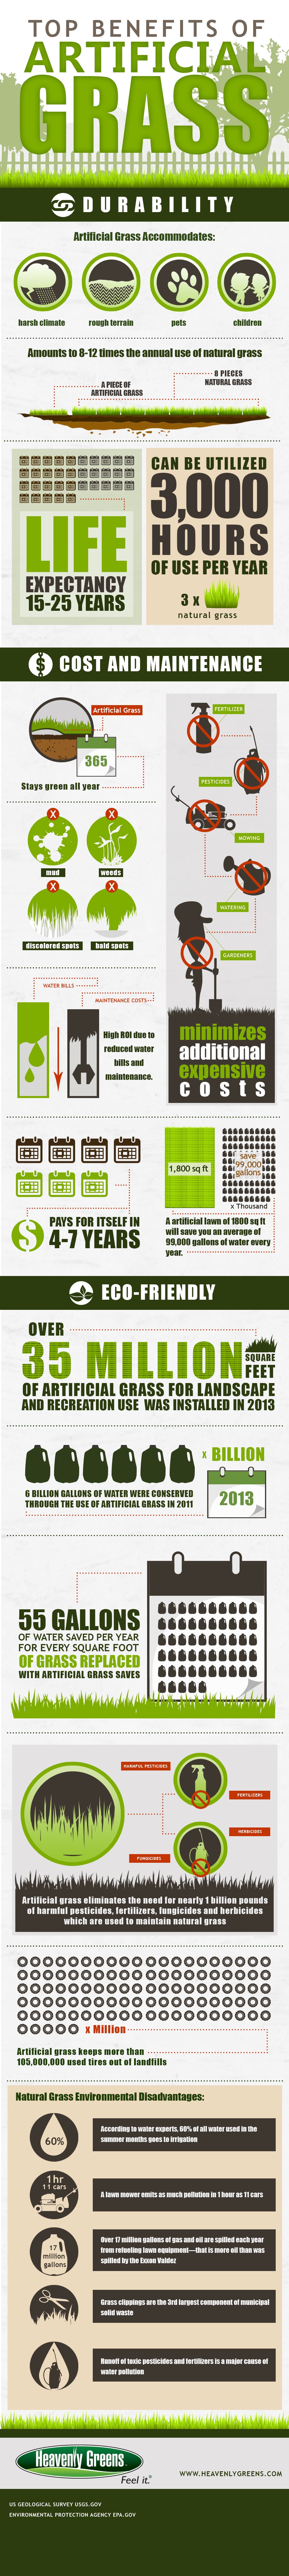 top-benefits-artificial-grass-infographic